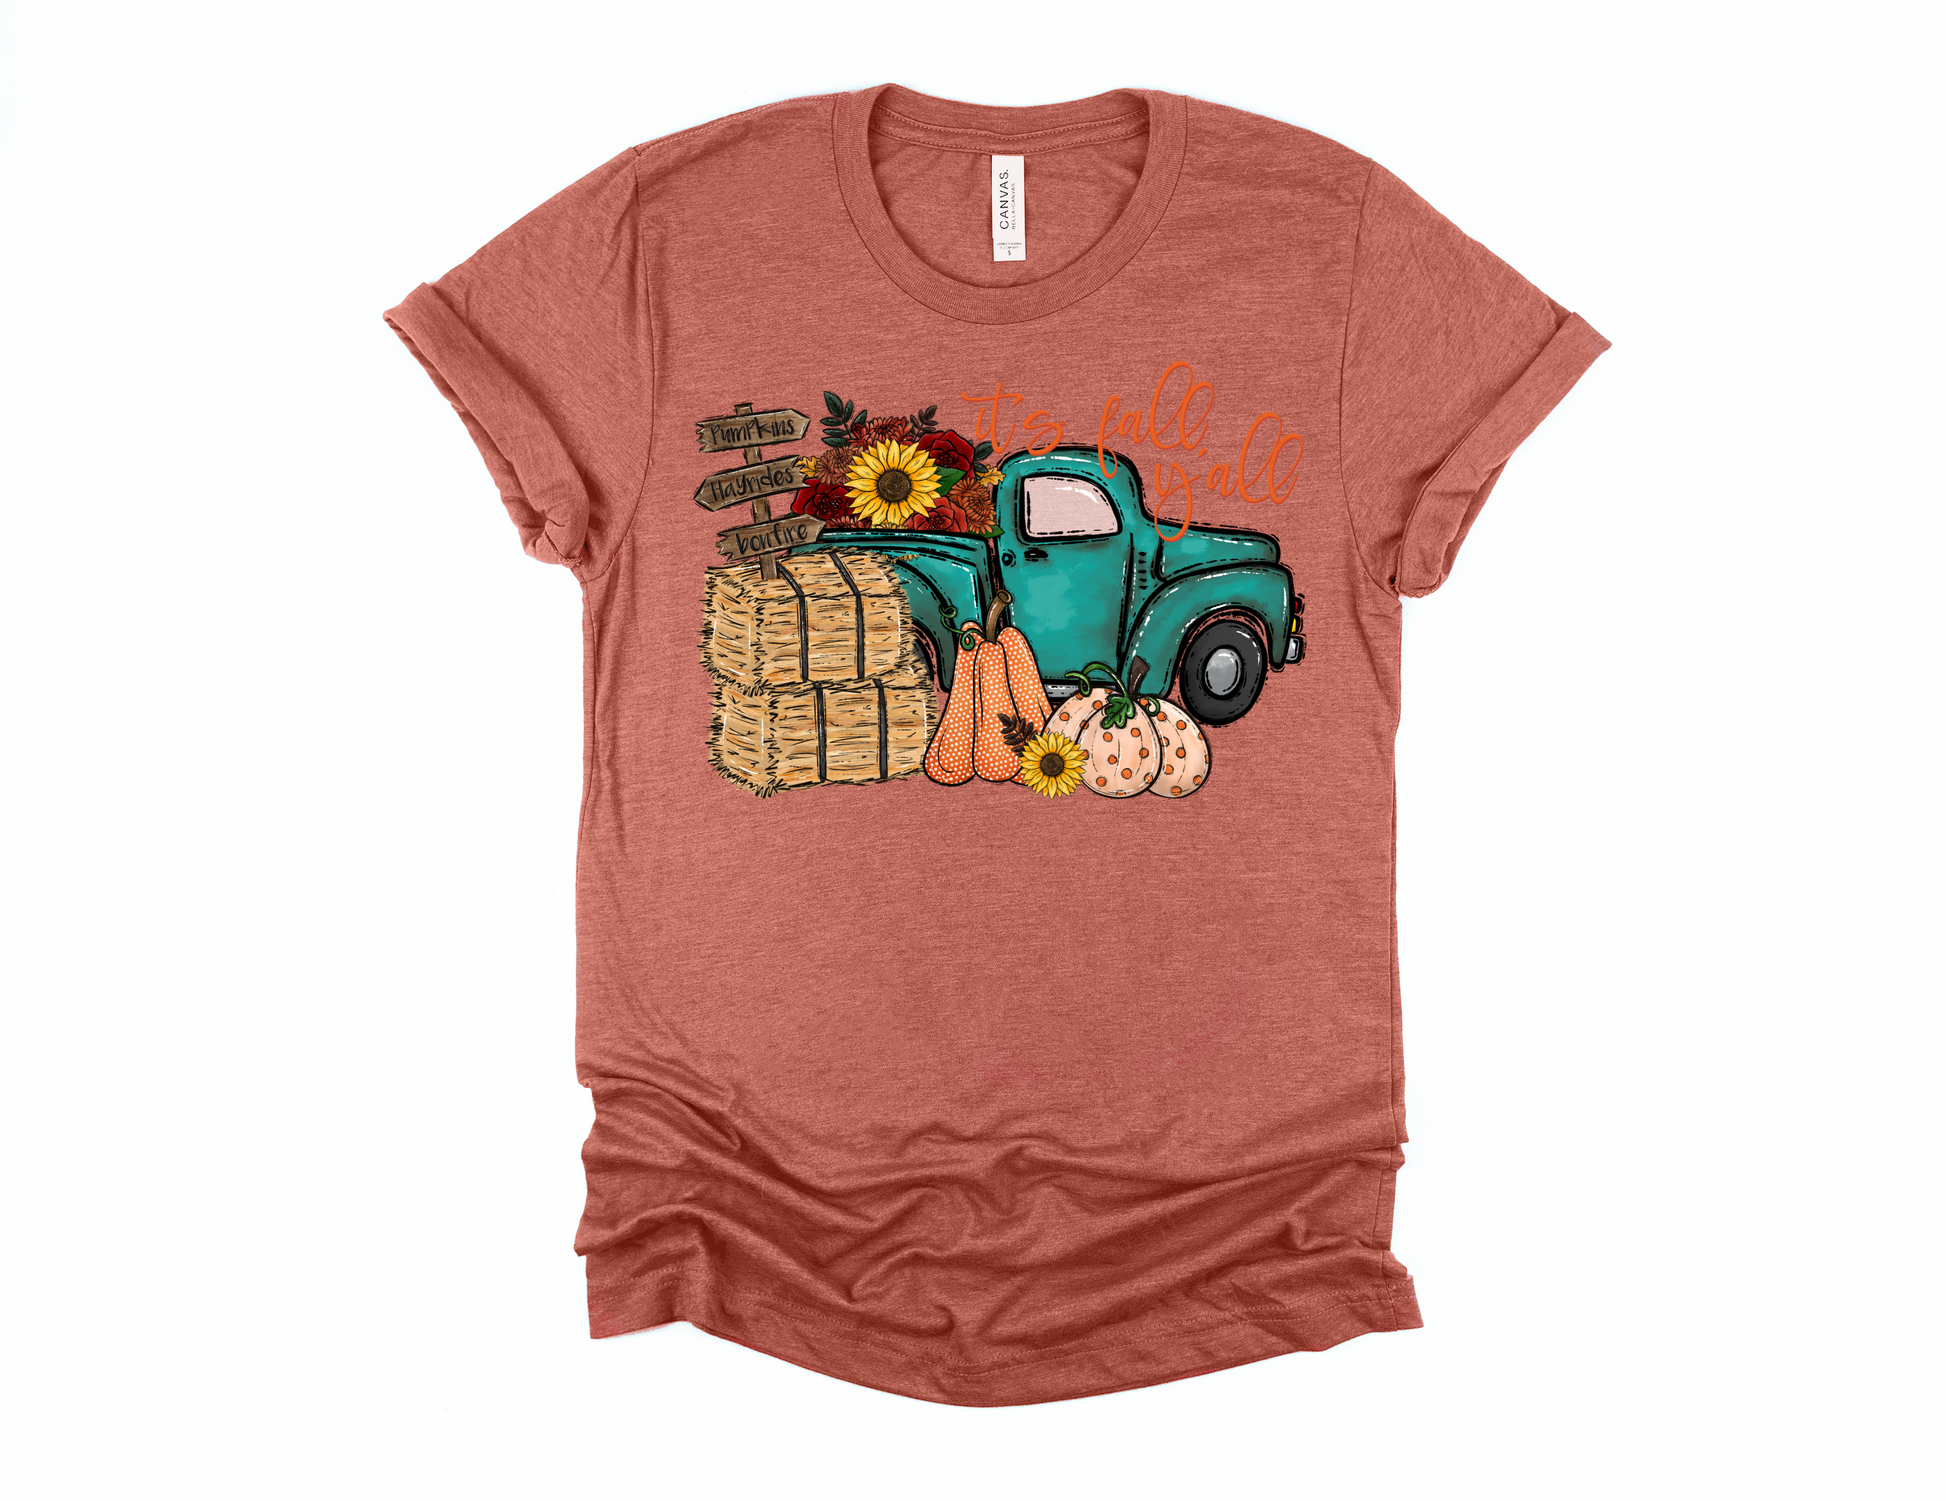 It's Fall Y'all T-shirt, women's fall appara;